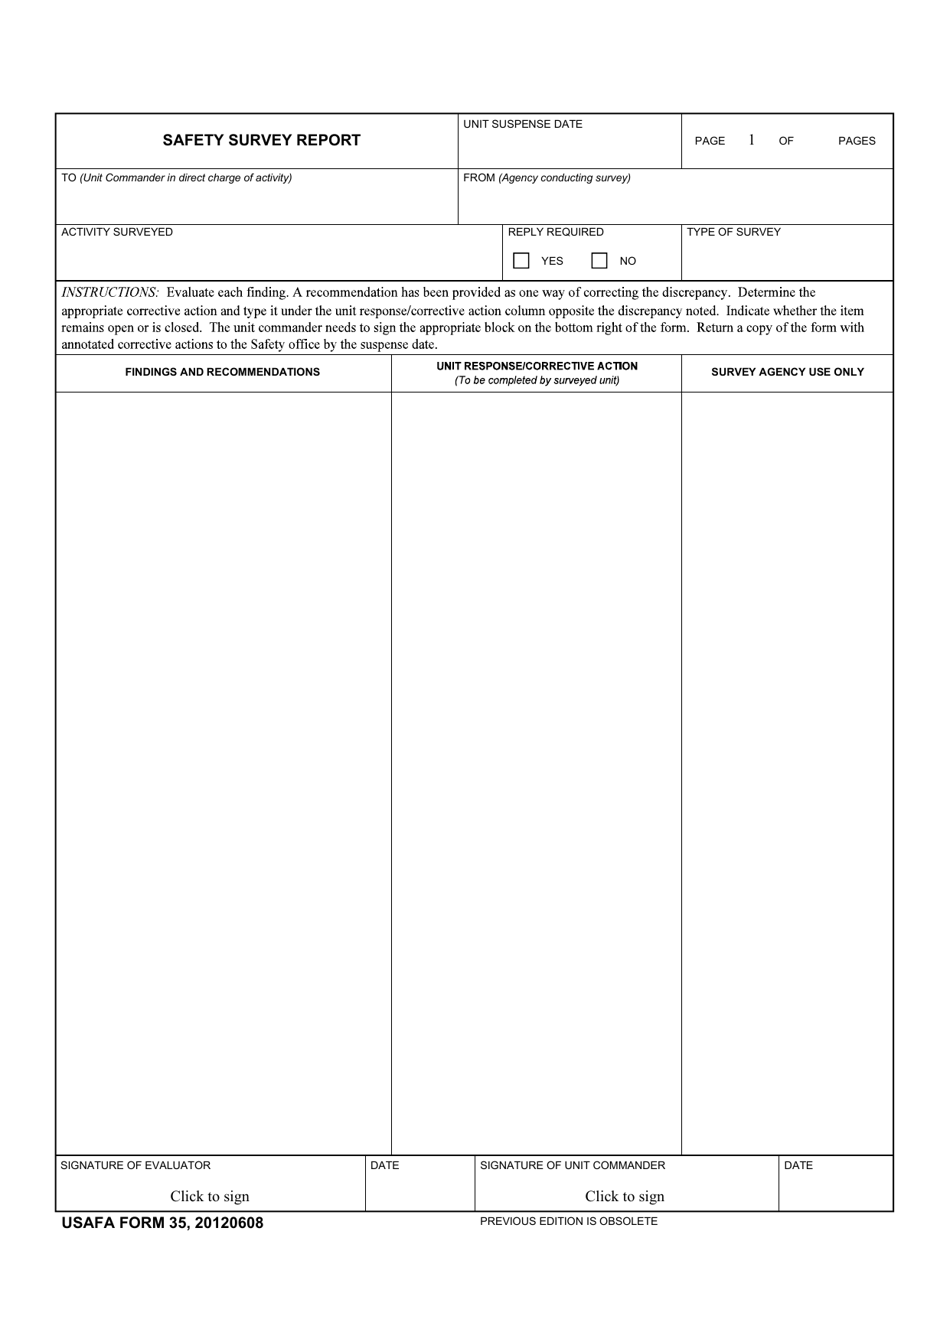 USAFA Form 35 Safety Survey Report, Page 1